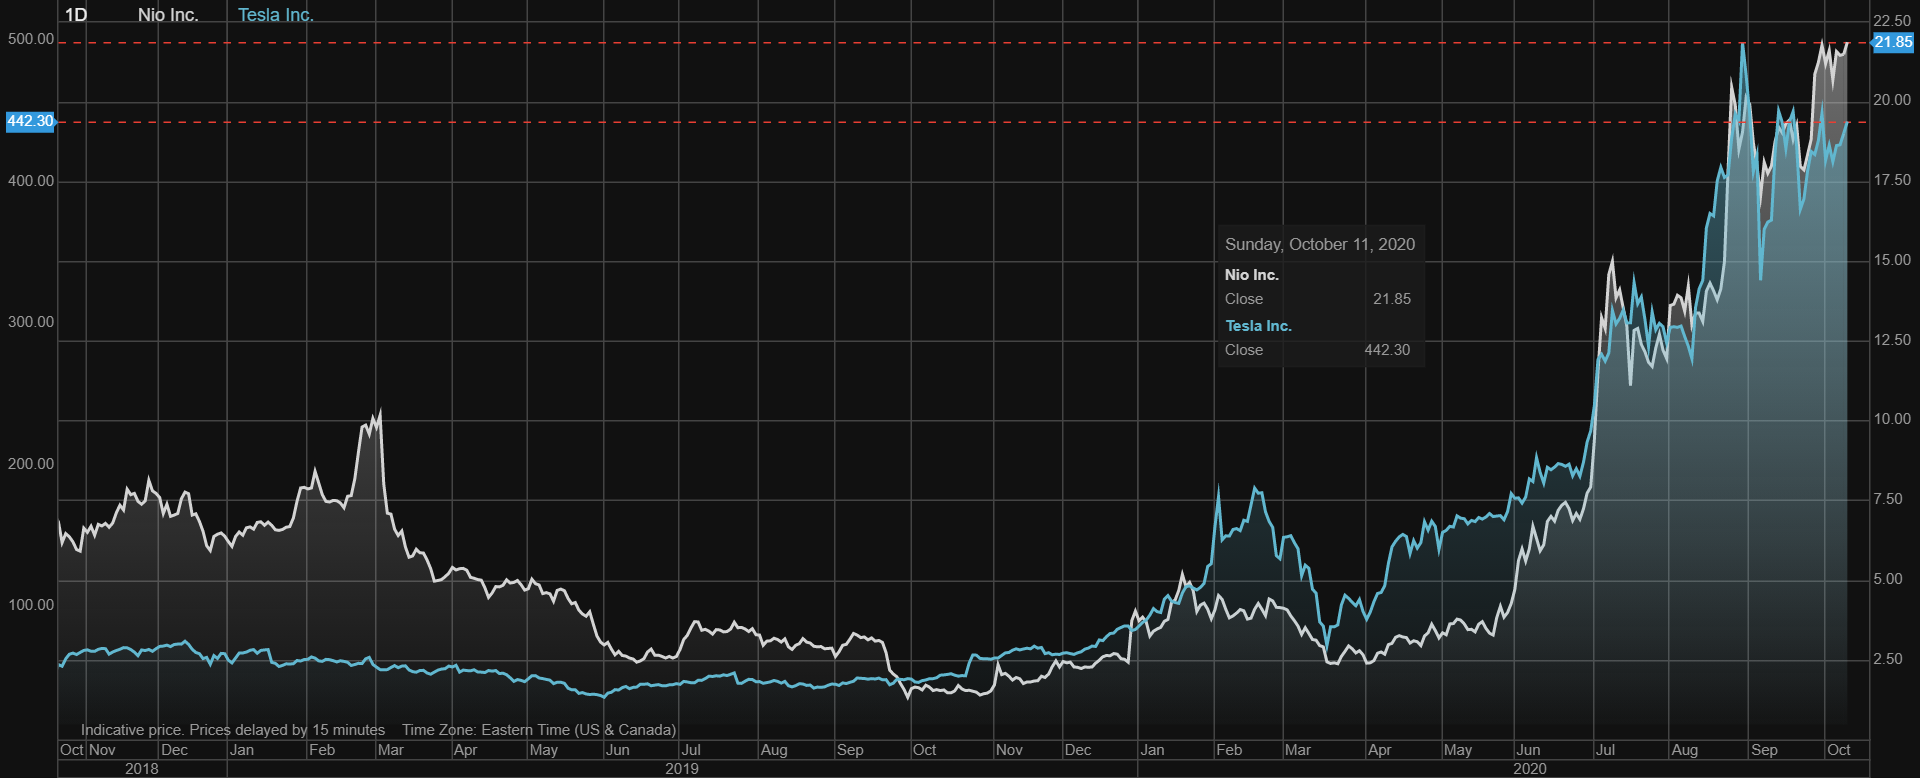 NIO (NIO) stock vs Tesla (TSLA) stock over the last 2 years